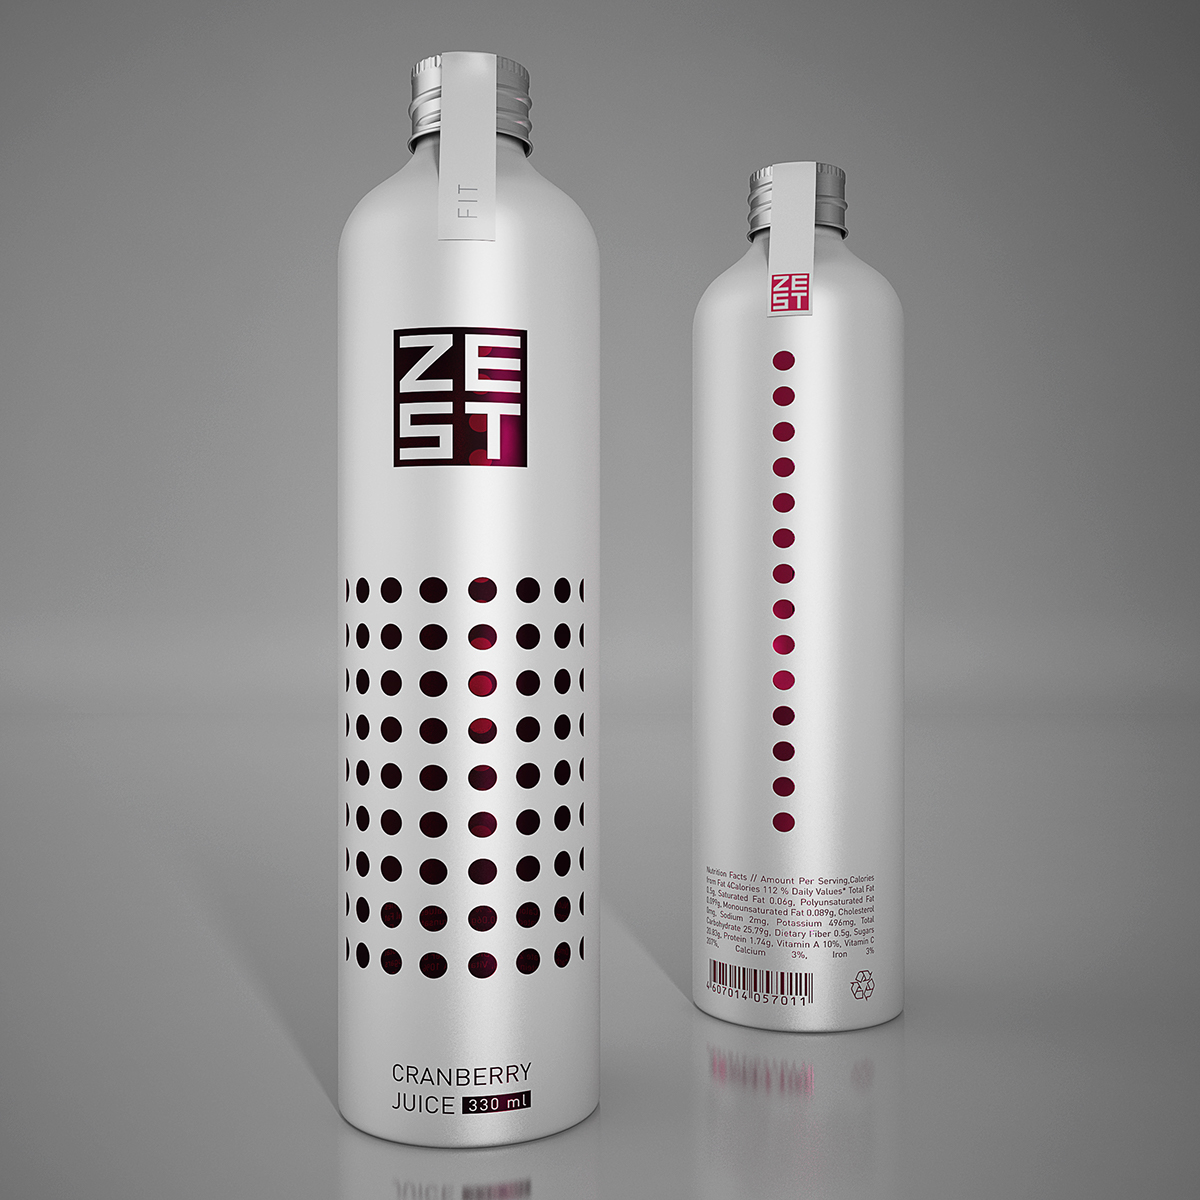 zest bottle design packaging design minimal 3d modeling branding  minimal packaging presentation natural product glass belgium cranberry juice simple